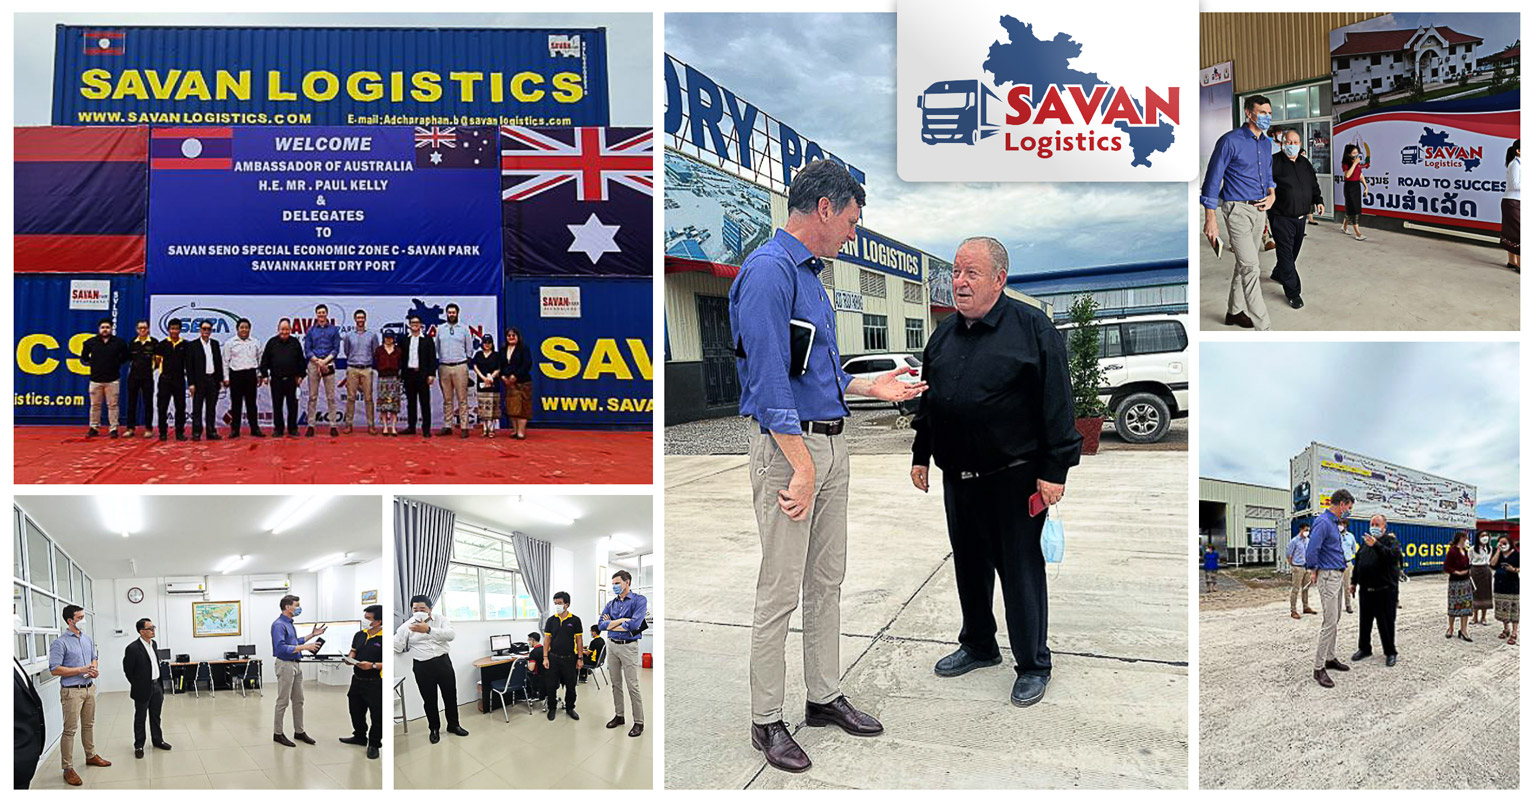 Savan Logistics Welcome the Ambassador of Australia and Delegates ...